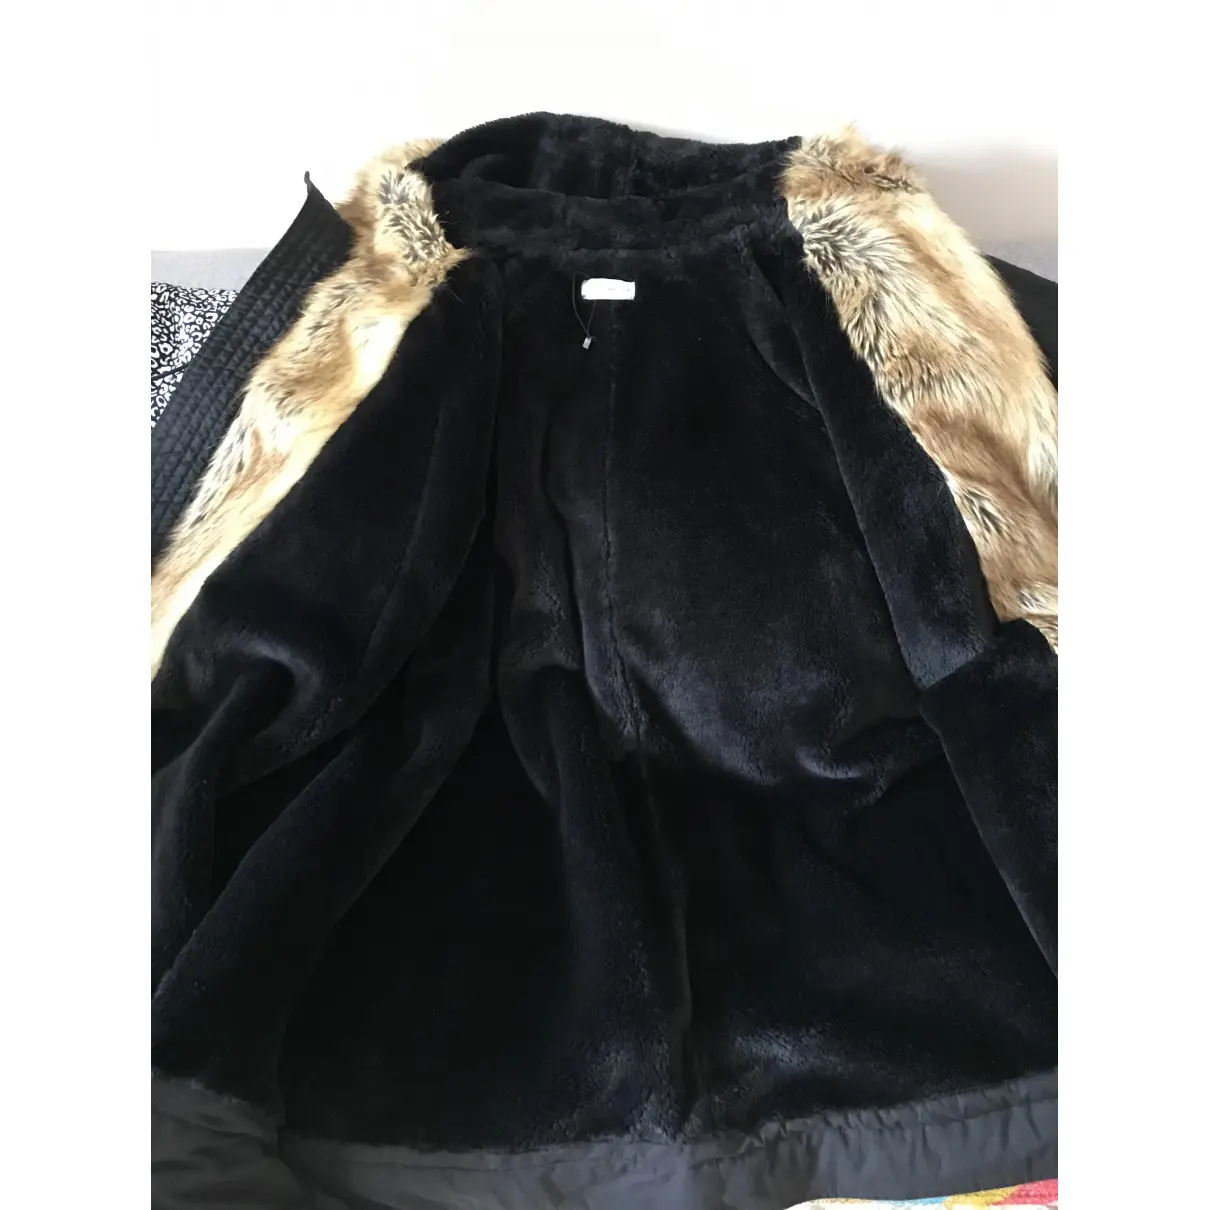 Buy Faith Connexion Black Polyester Coat online